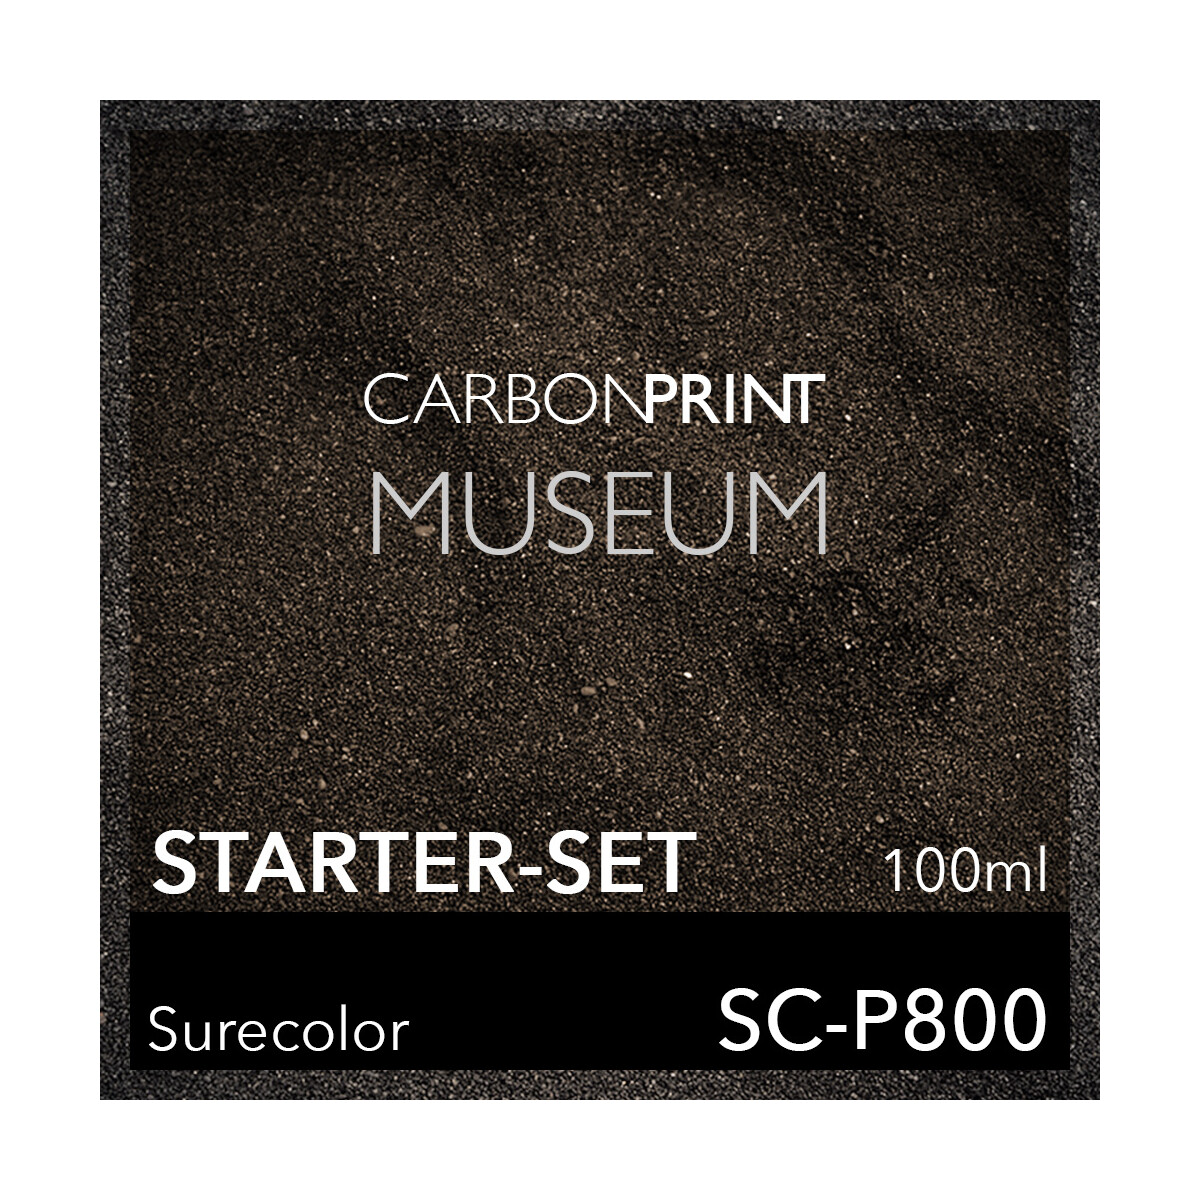 Starter-Set Carbonprint Museum for SC-P800 100ml